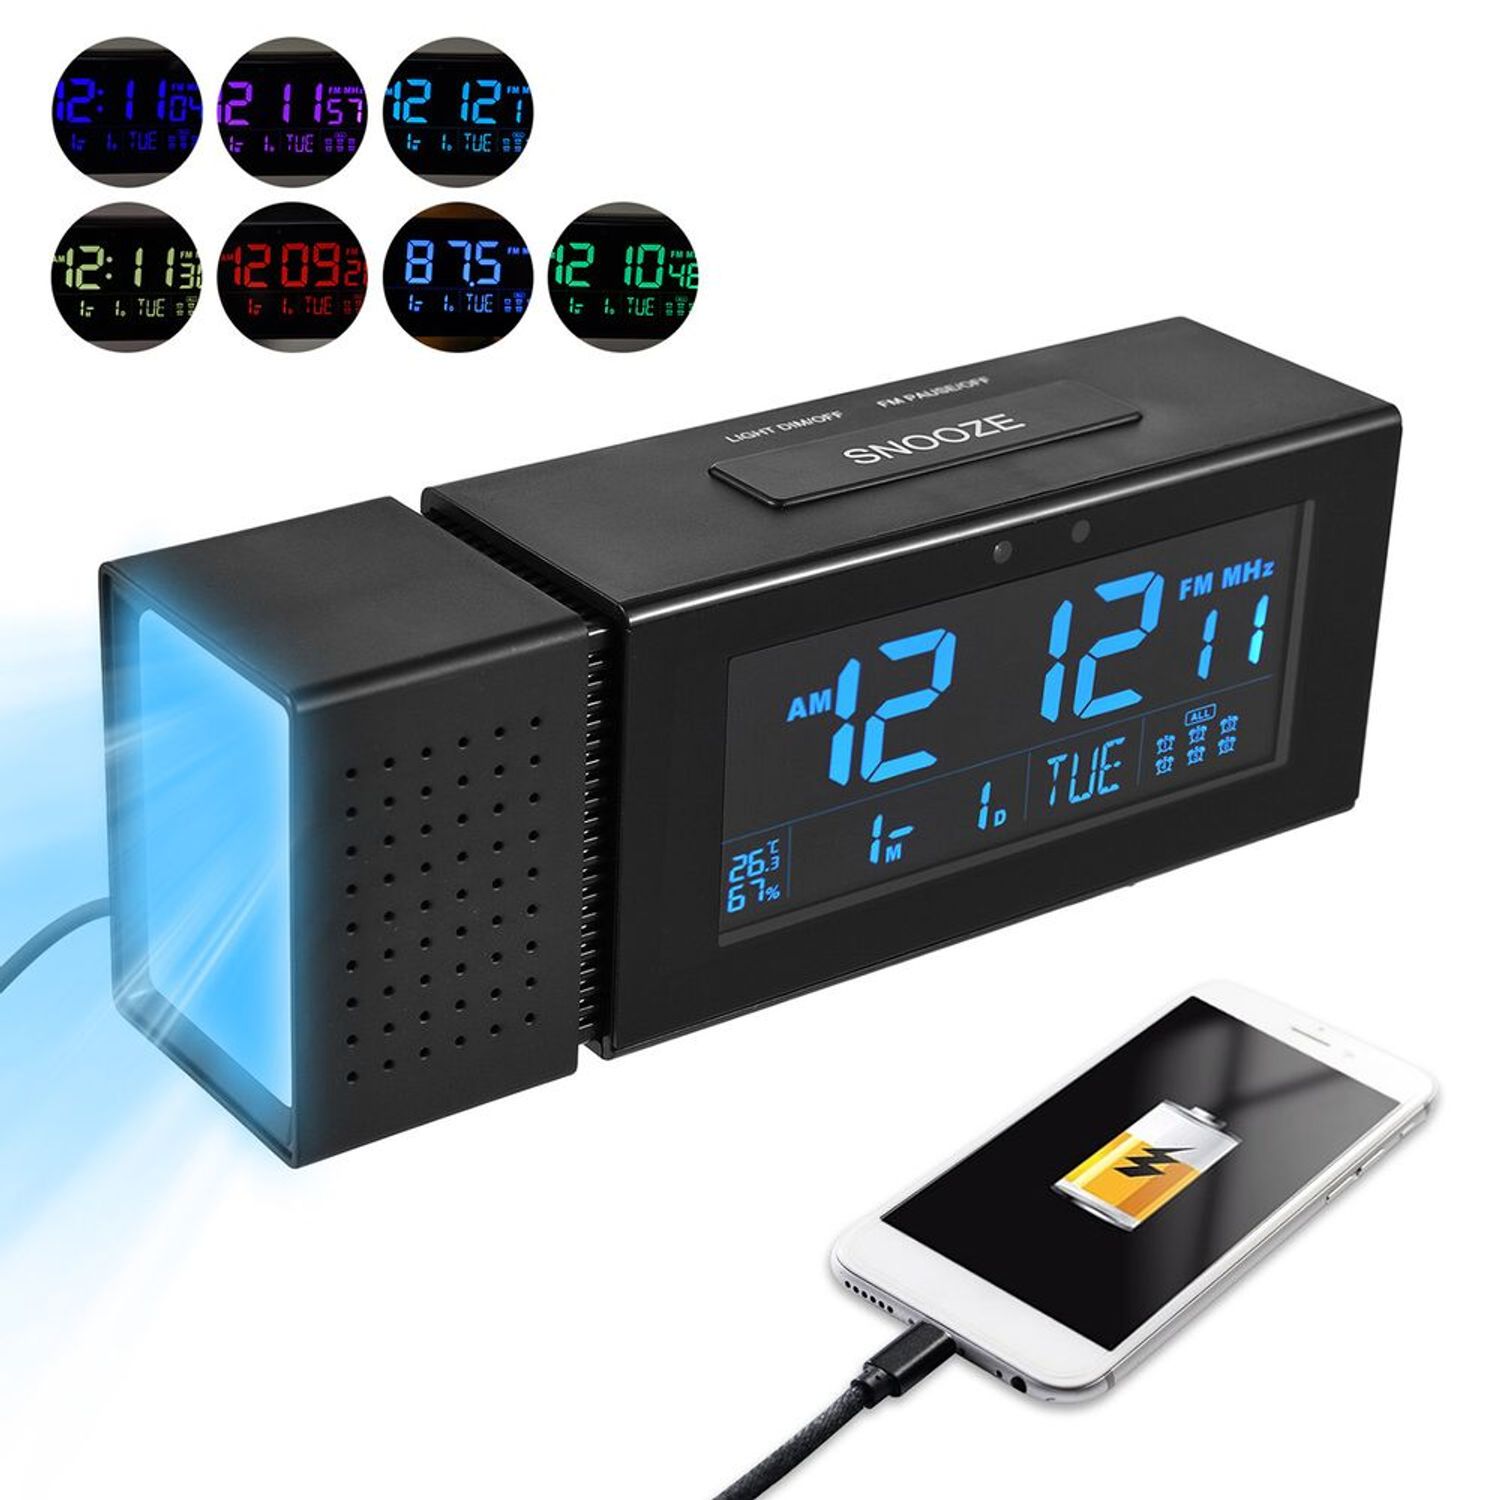 Mesilla USB carga electrónica despertador dormitorio estudiante Snooze  reloj electrónico despertador digital